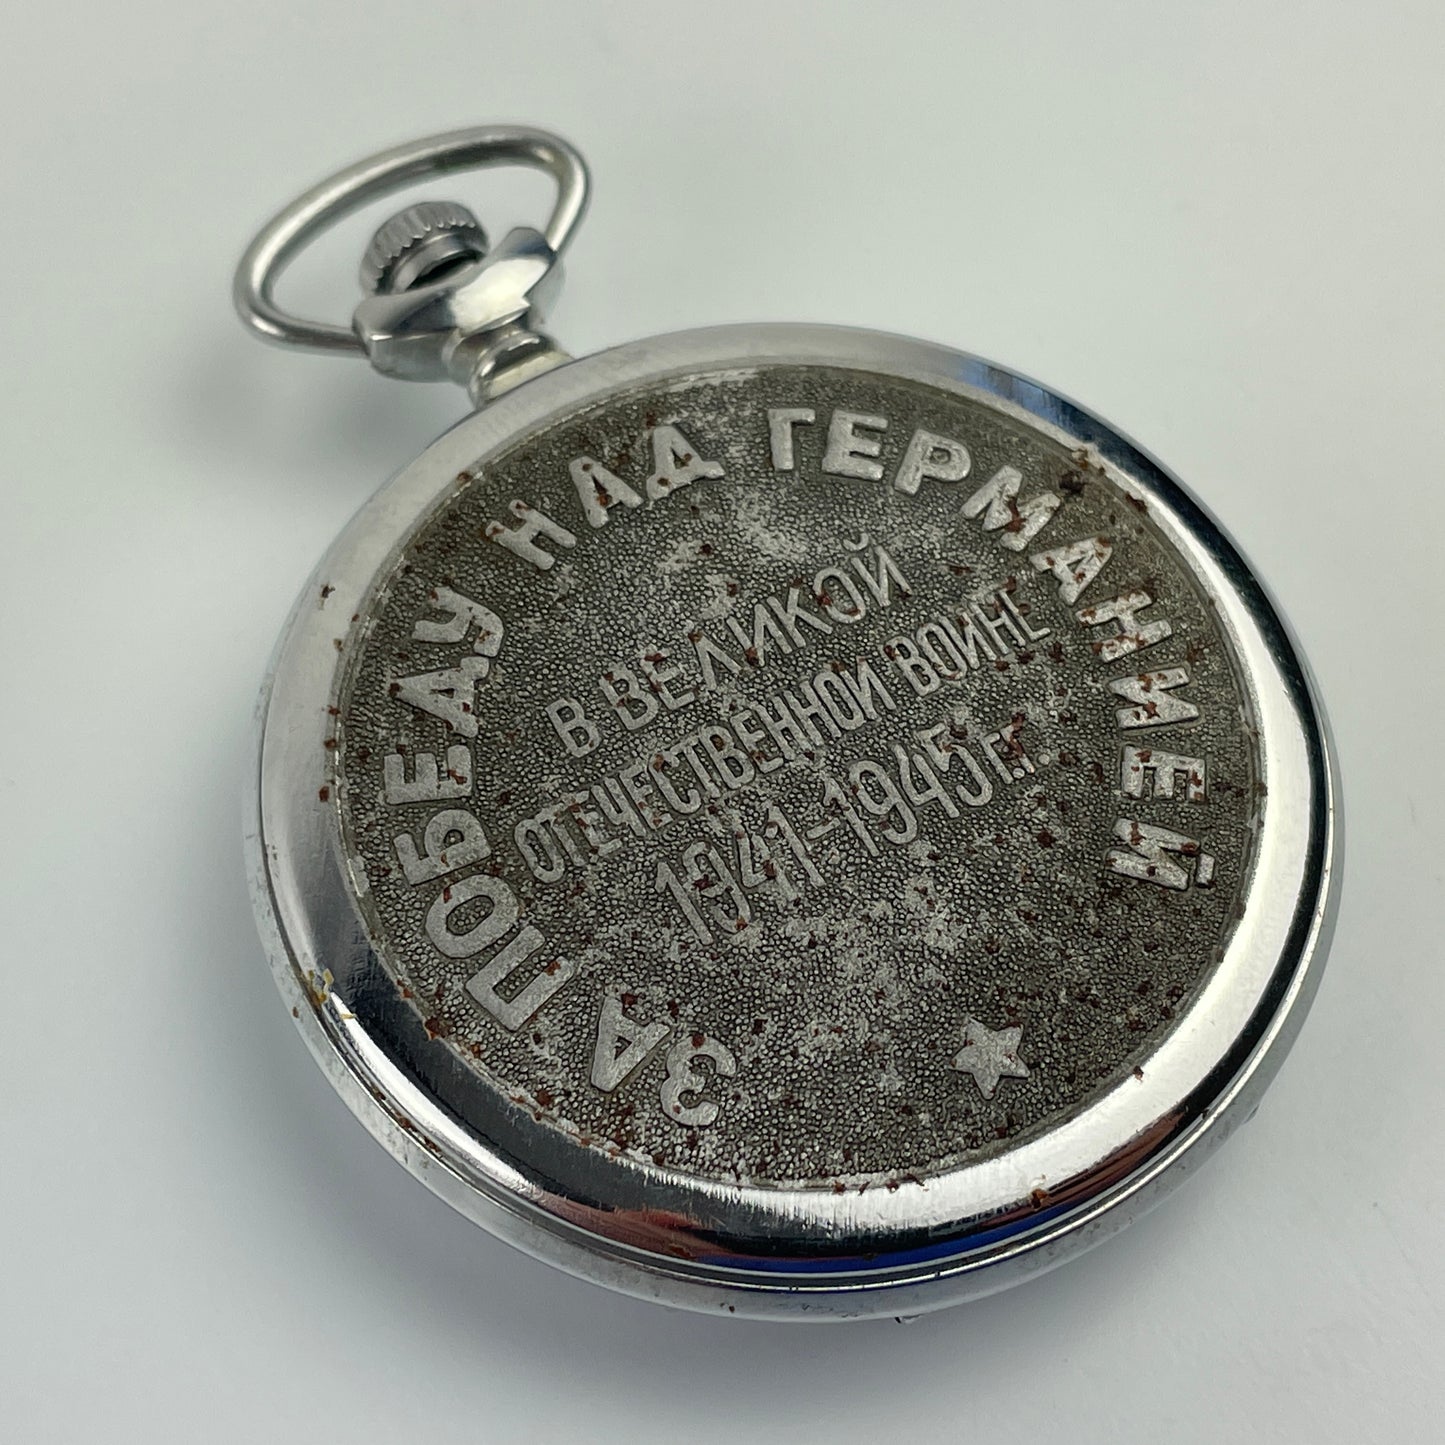 Lot 10- Russian Men’s Vintage Mechanical Pocket Watch